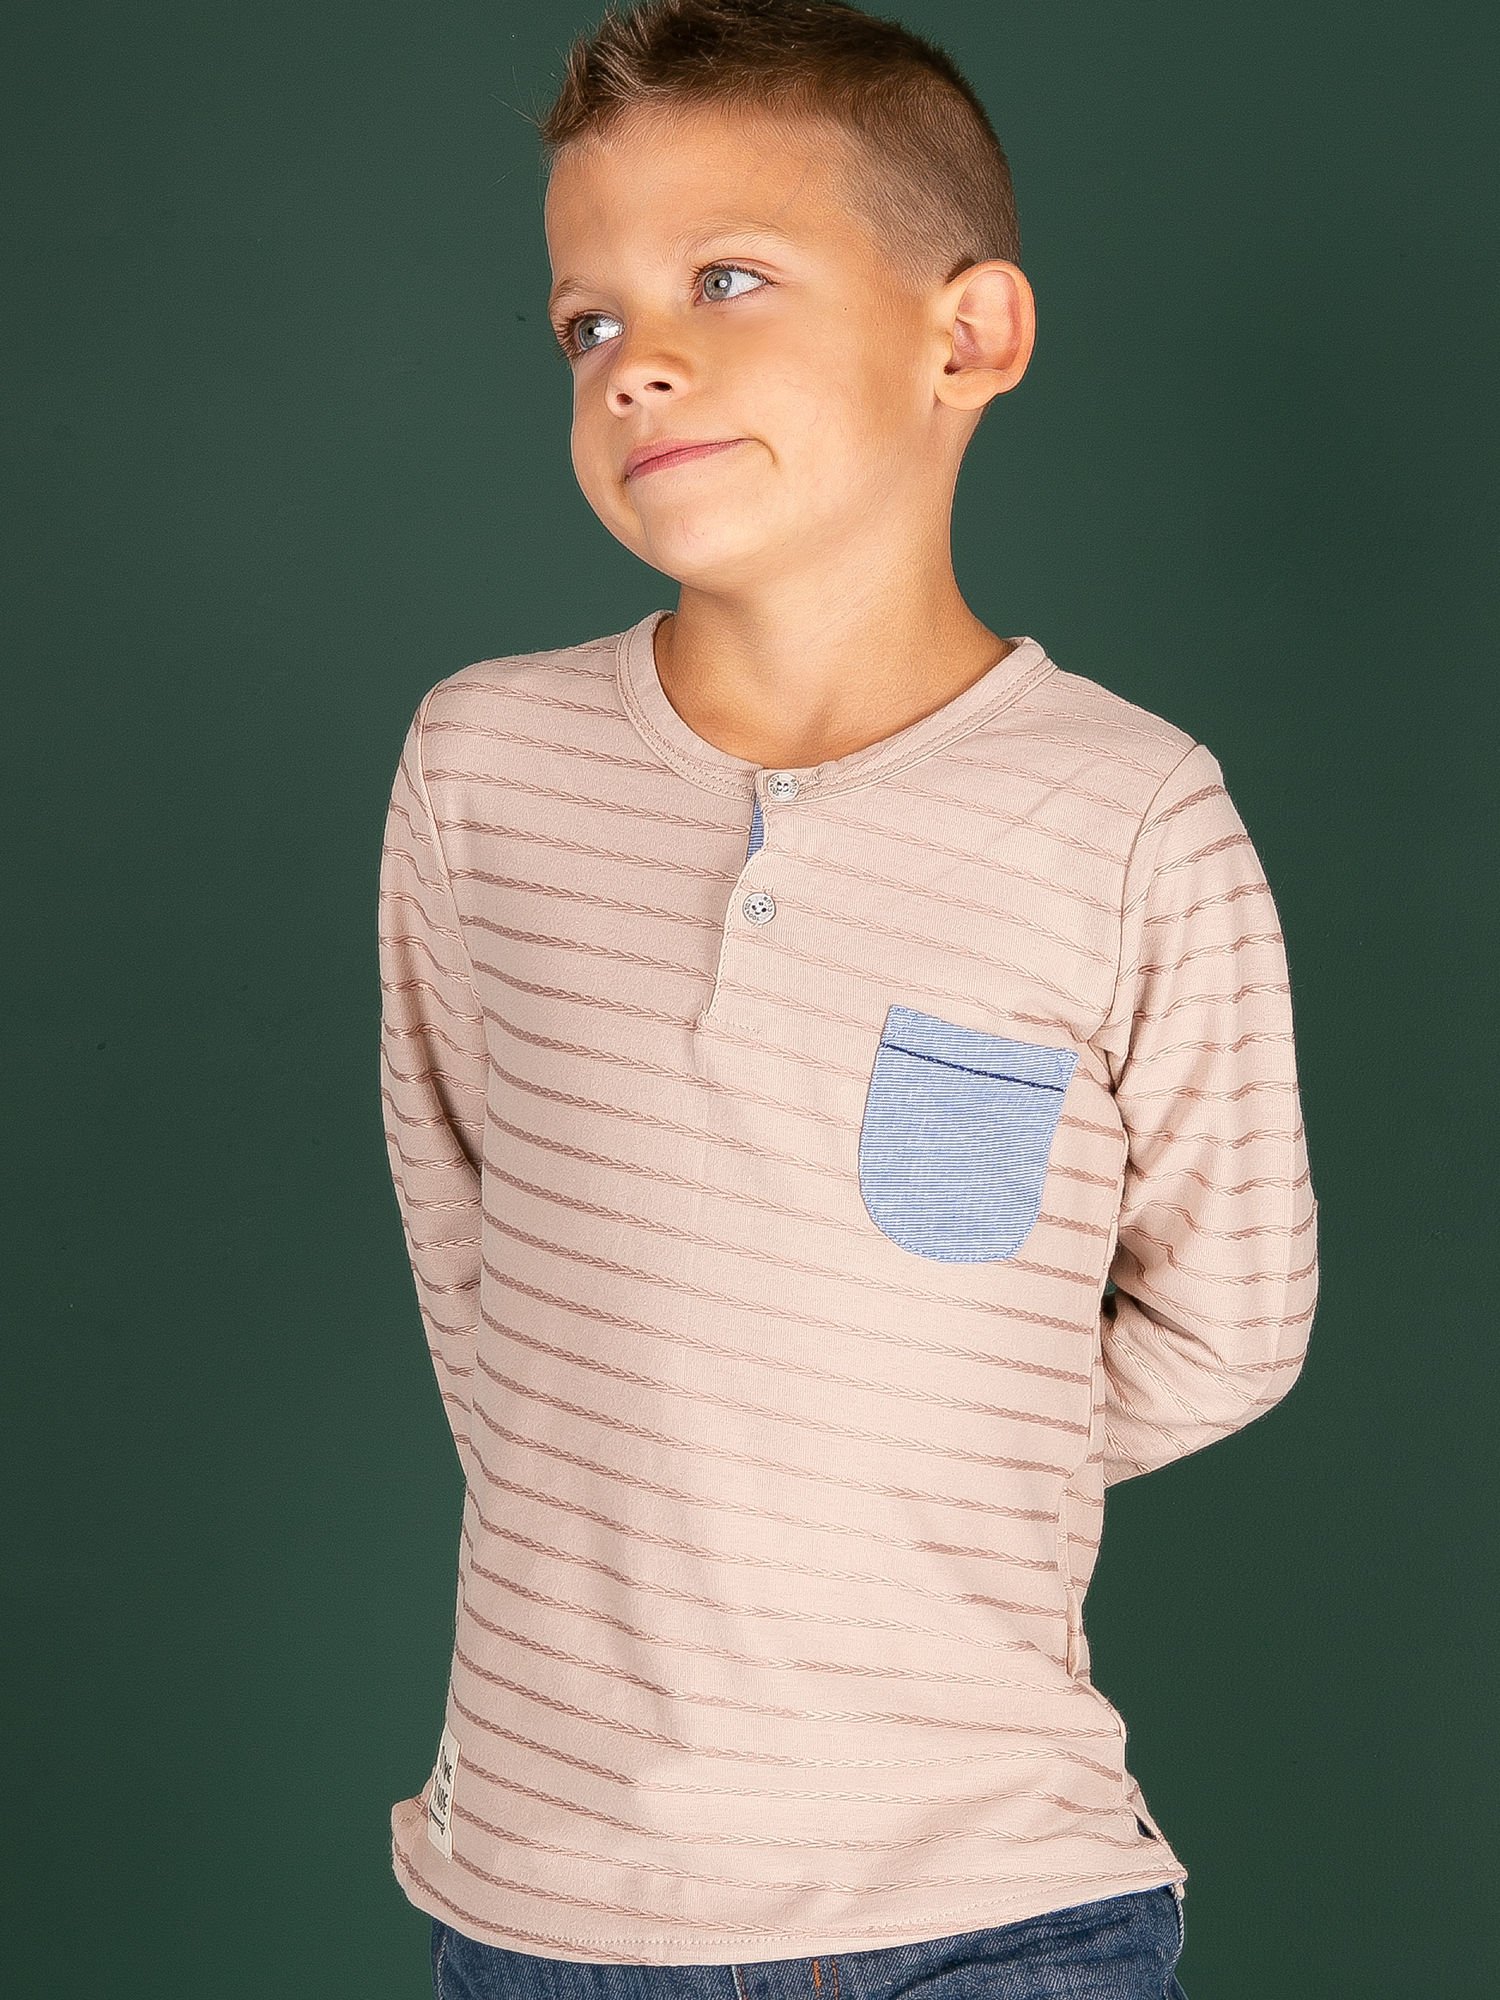 Chlapecké tričko s kapsičkou TY-BZ-9111.98-beige Velikost: 98